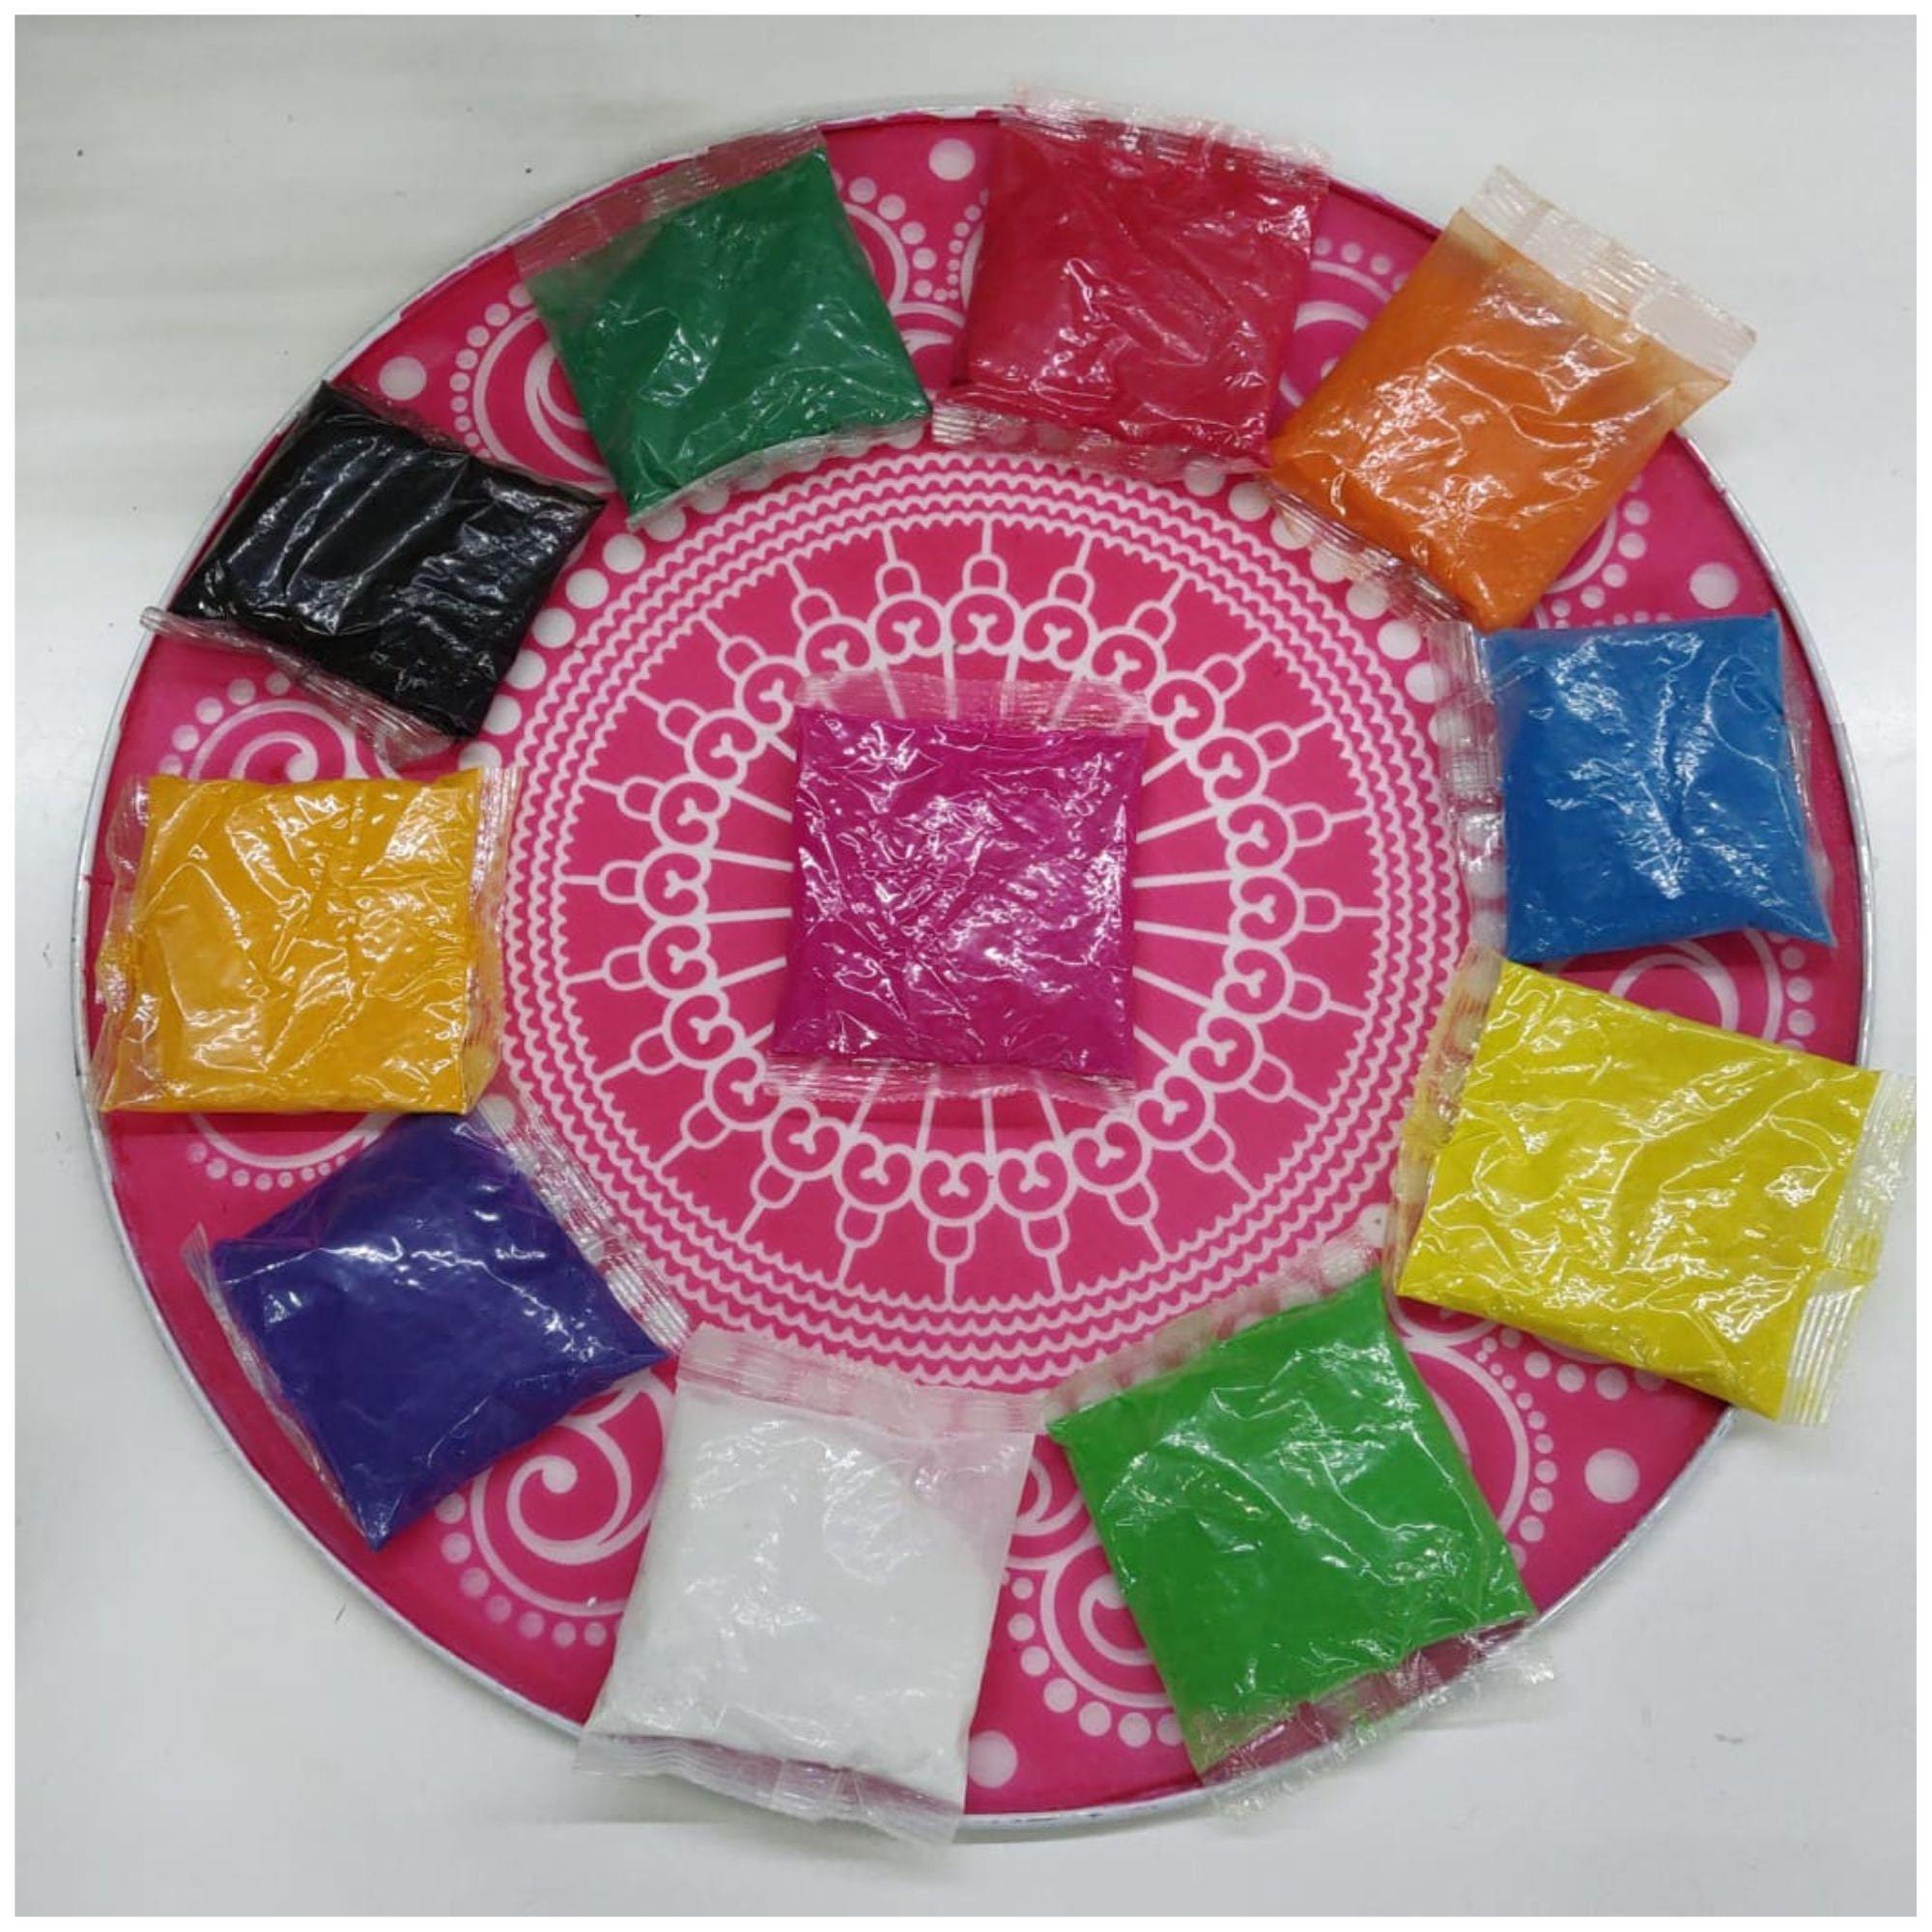 LoveNspire 6 Color Rangoli Powder Kit, Rangoli Colors, Rangoli Decorations, Rangoli Making Kit, Rangoli Colors for Diwali, Navratri Decoration